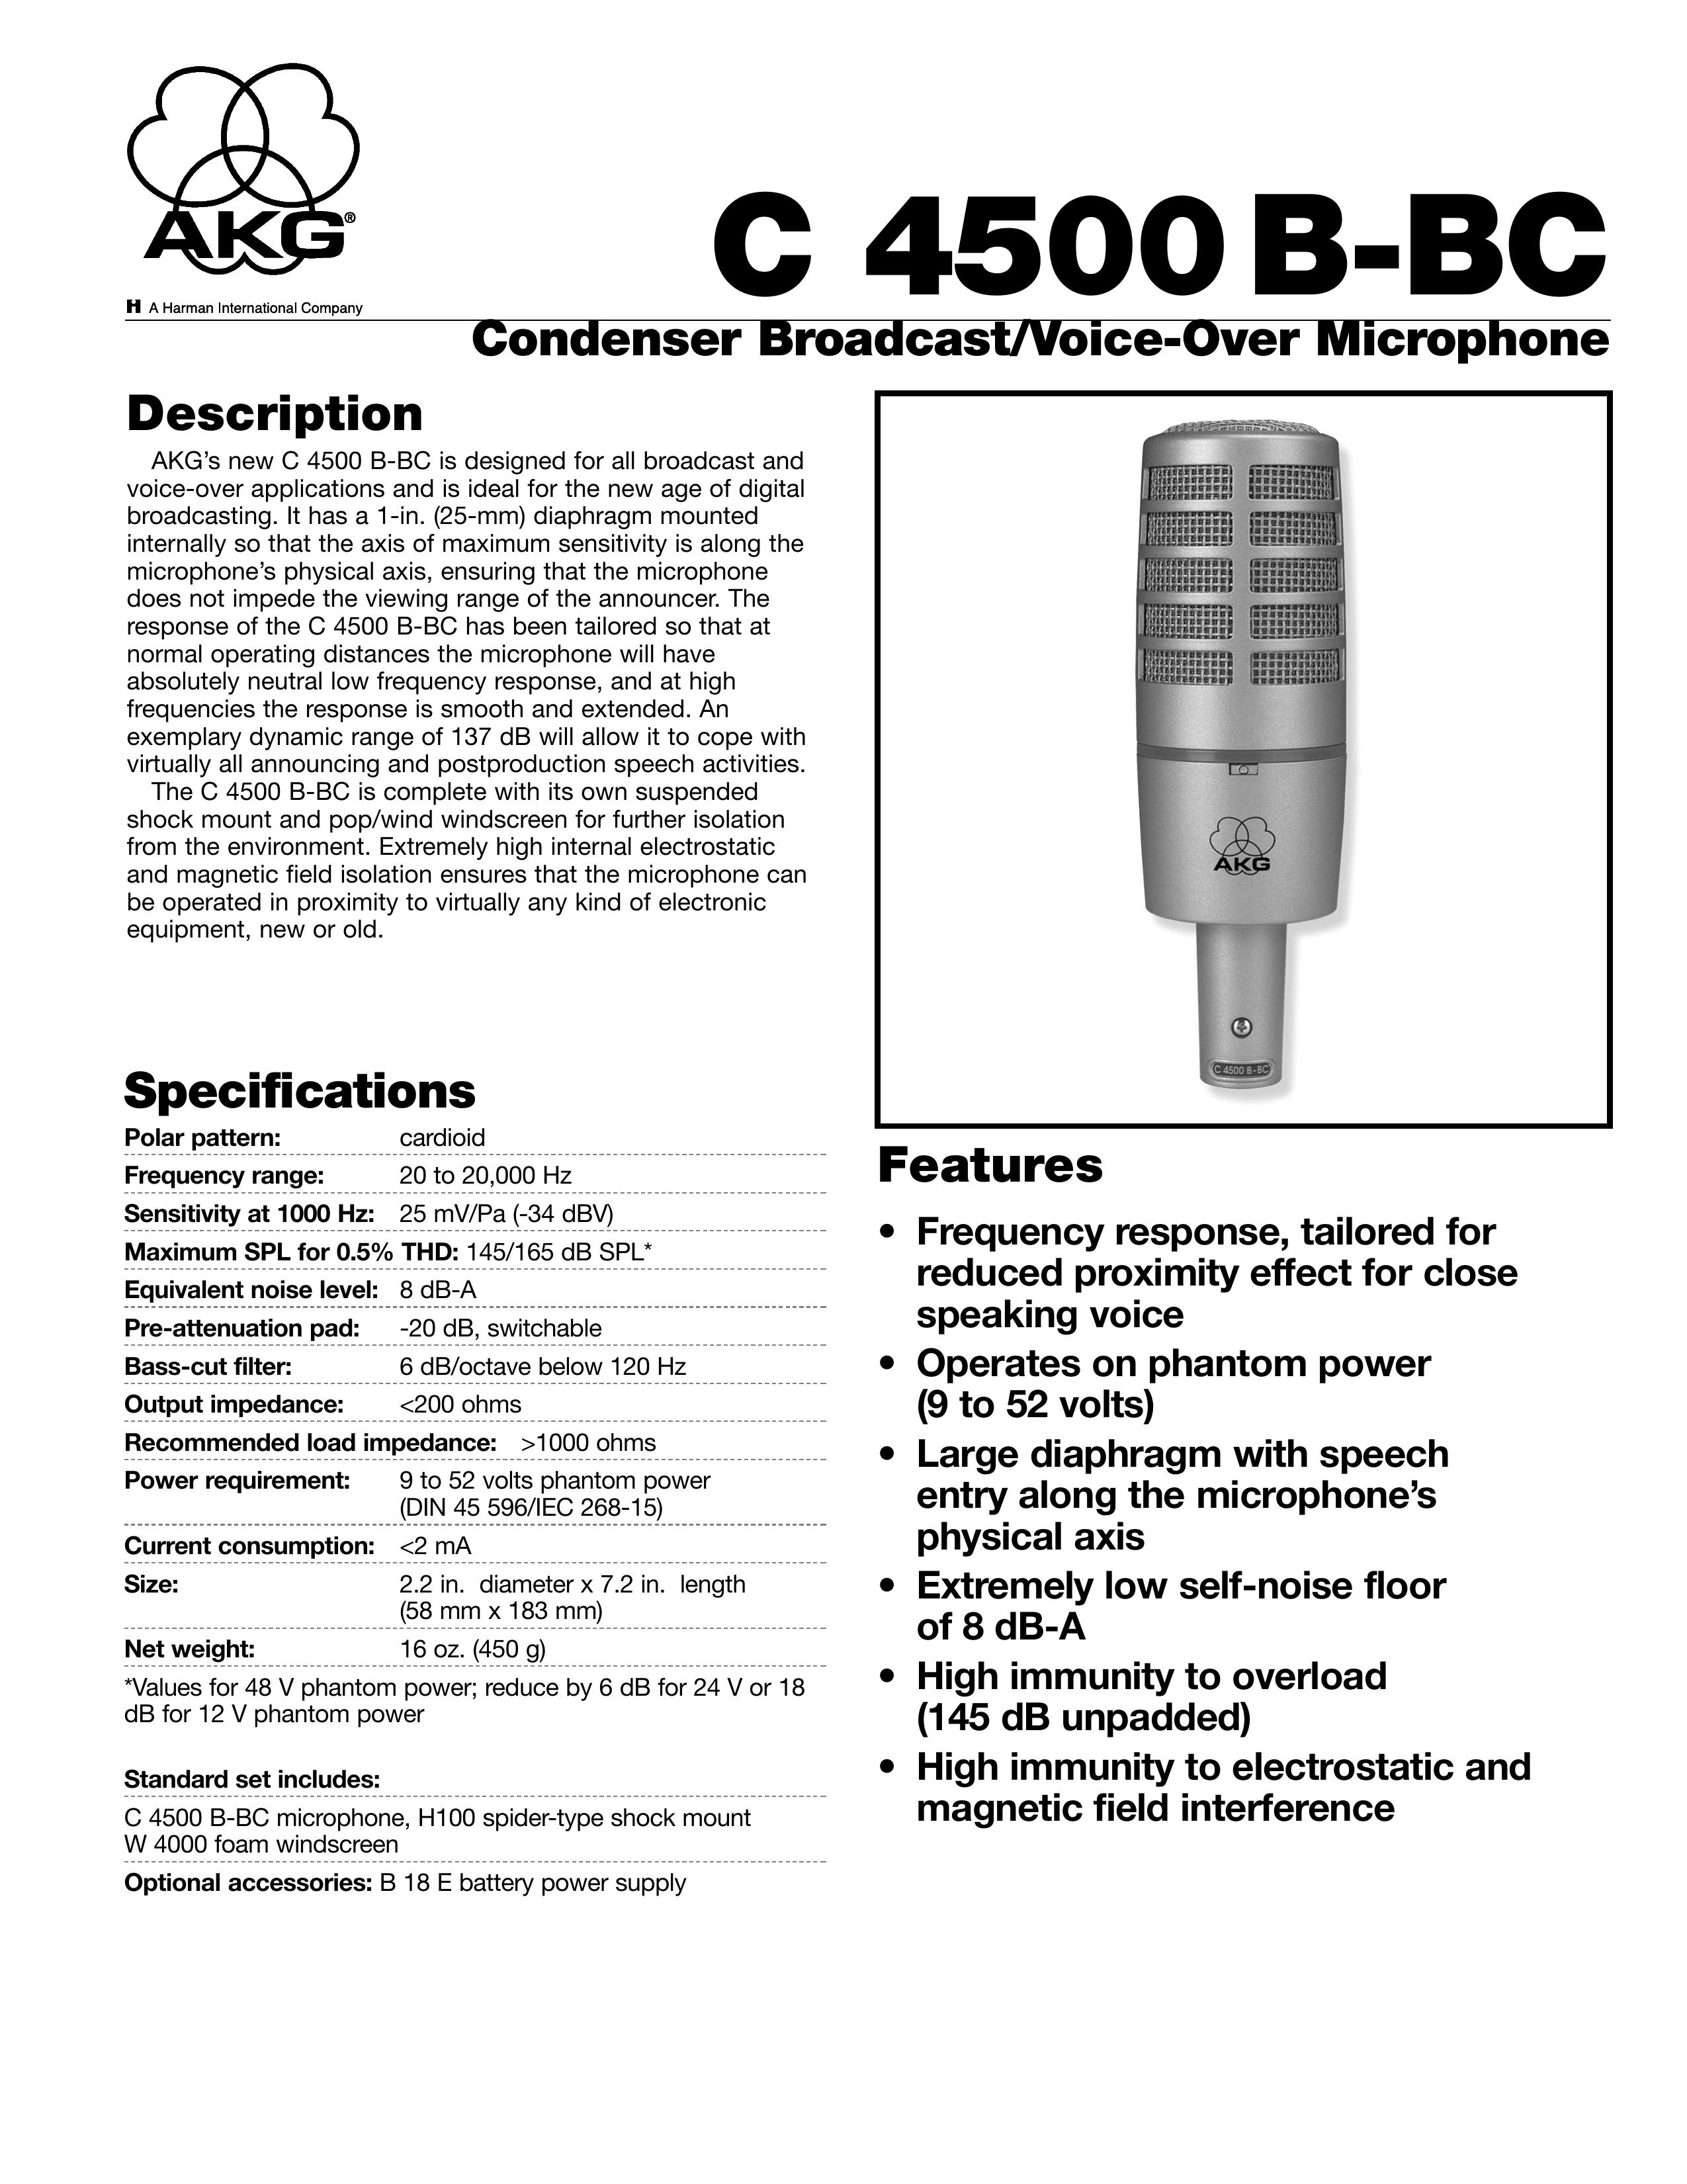 AKG Acoustics C 4500B-BC Microphone User Manual (Page 1)